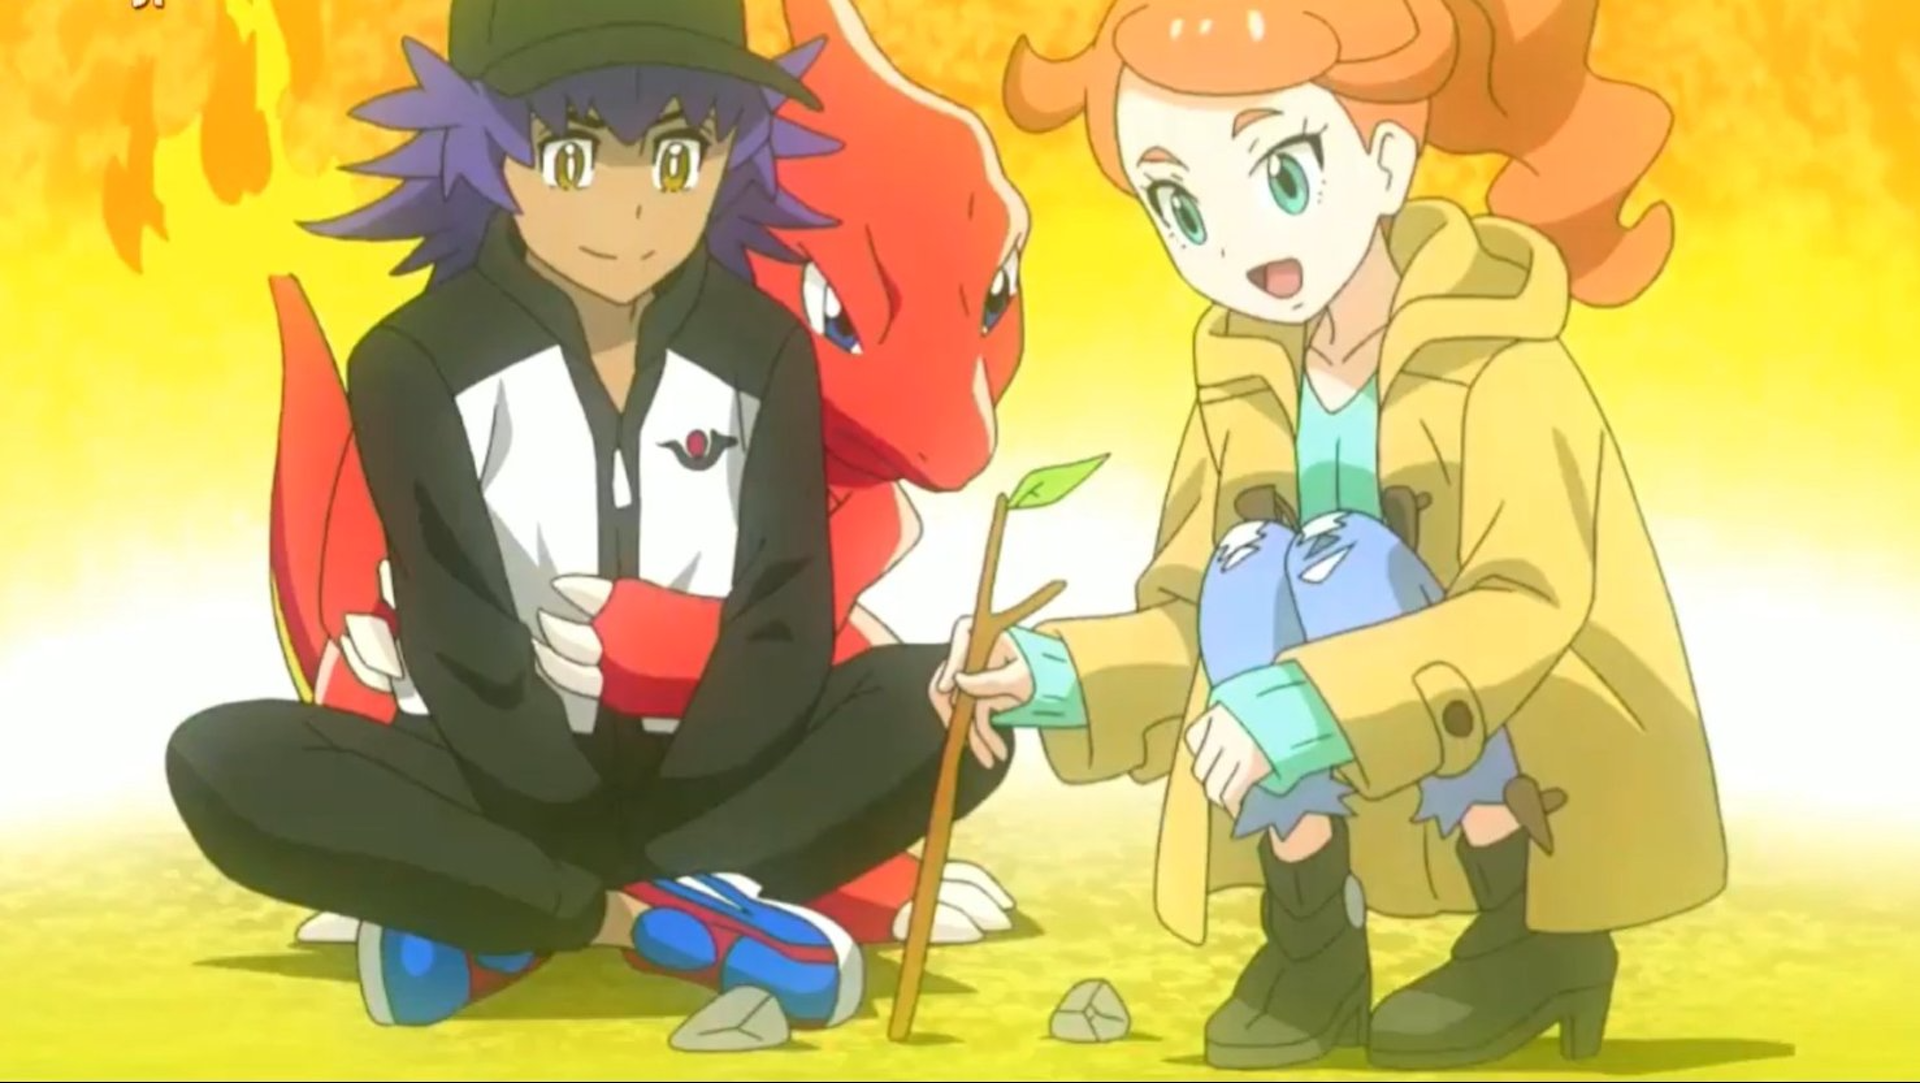 I hope this is Leon's anime team : r/pokemonanime